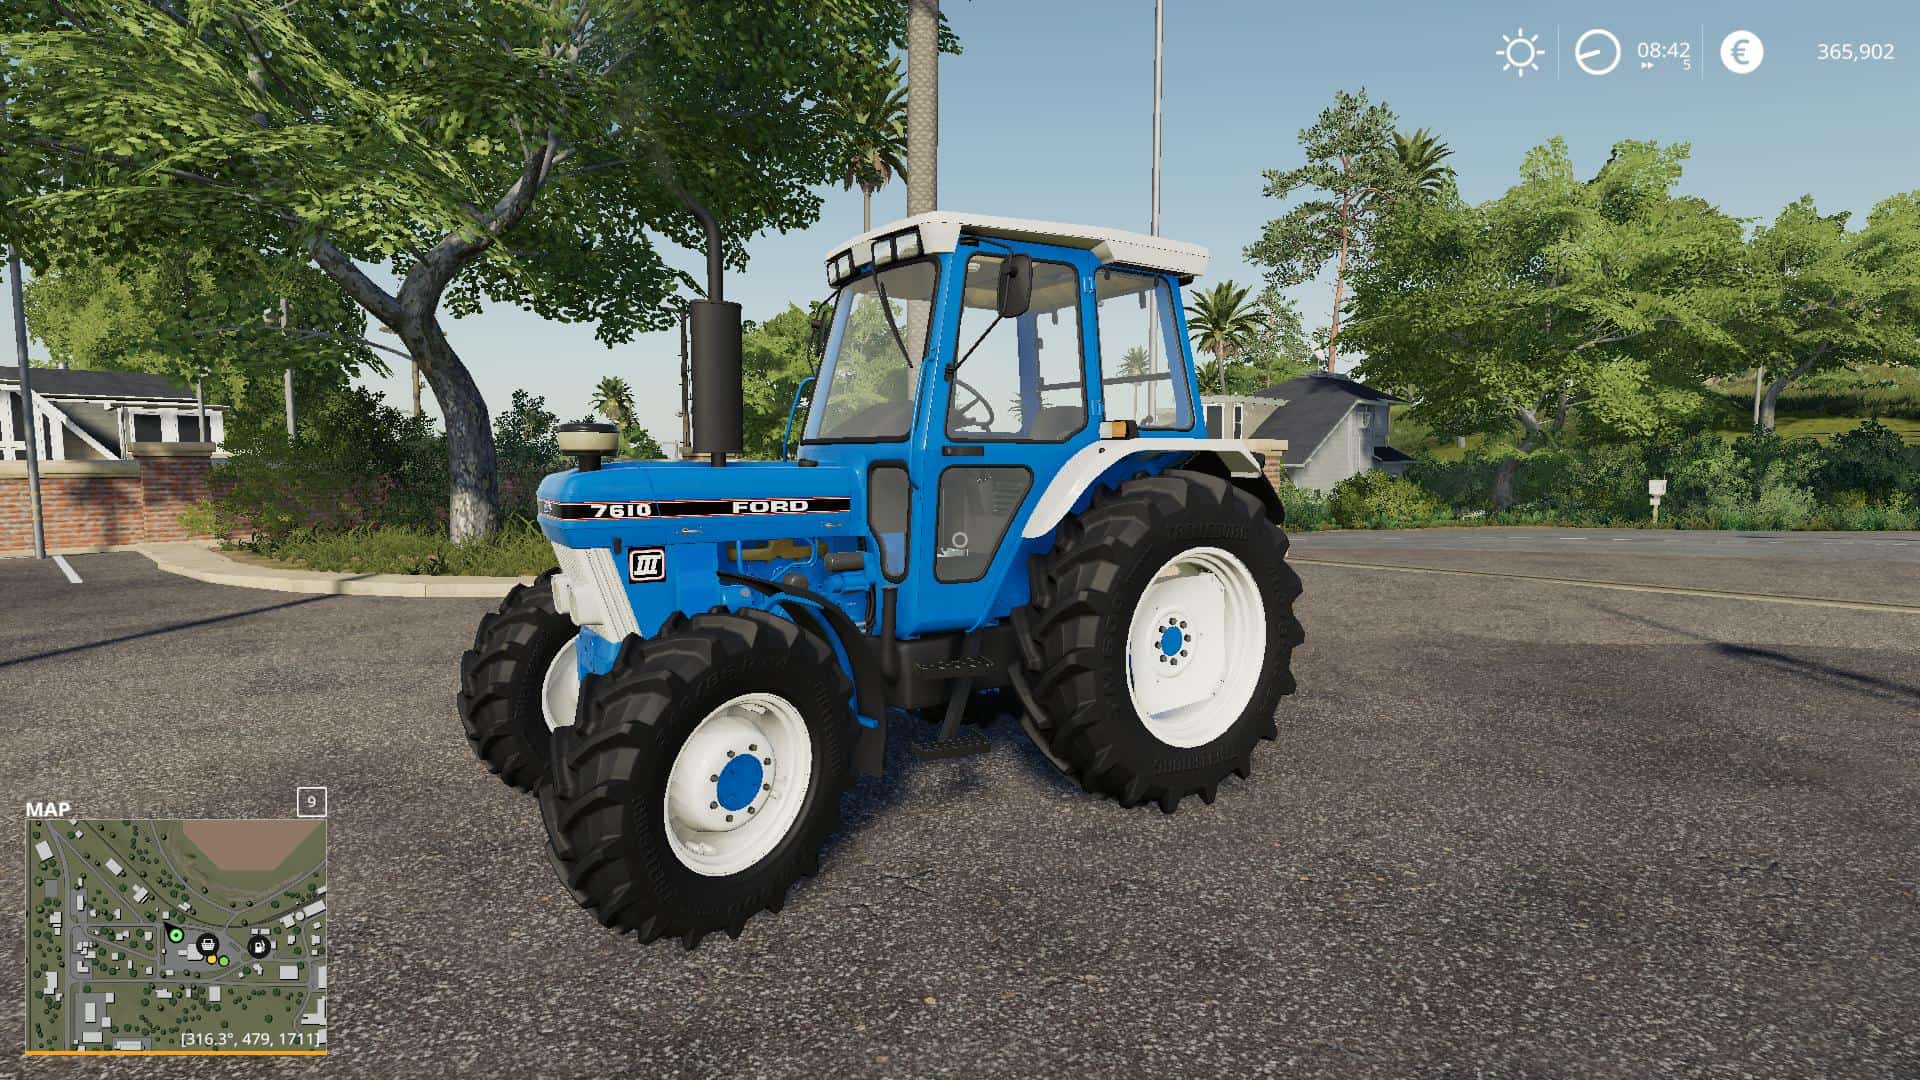 Ford 7610 V10 Fs19 Landwirtschafts Simulator 19 Mods Ls19 Mods